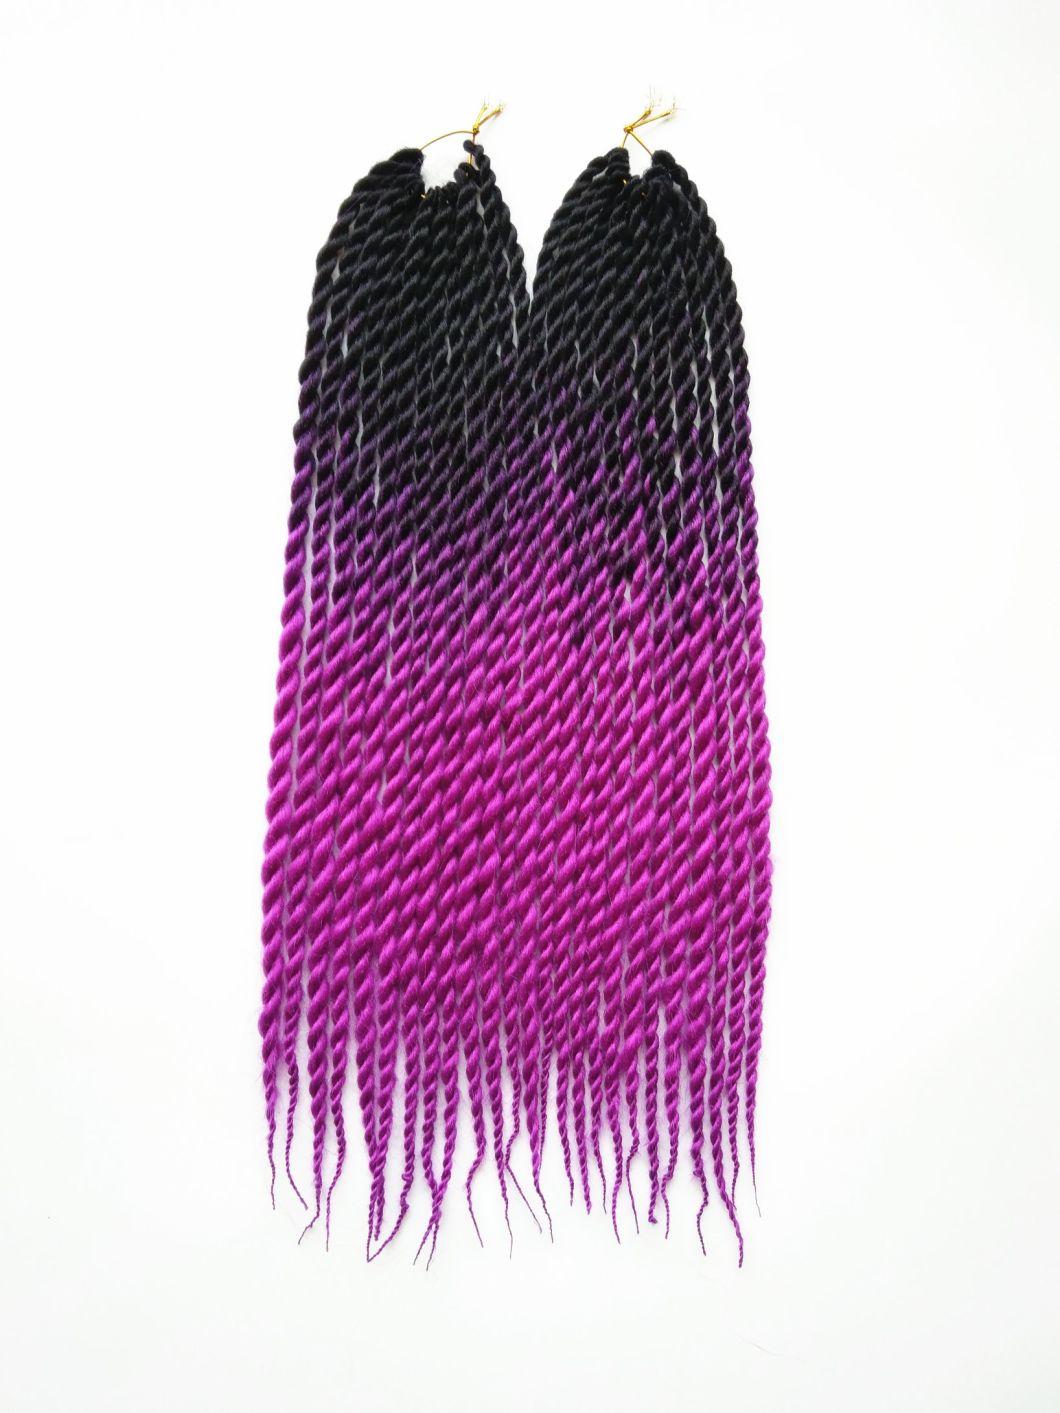 30 Strands/Piece Synthetic Hair Kanekalon Twist Braiding Hair Extensions 26" Flame Resistant Crochet Hair Braids